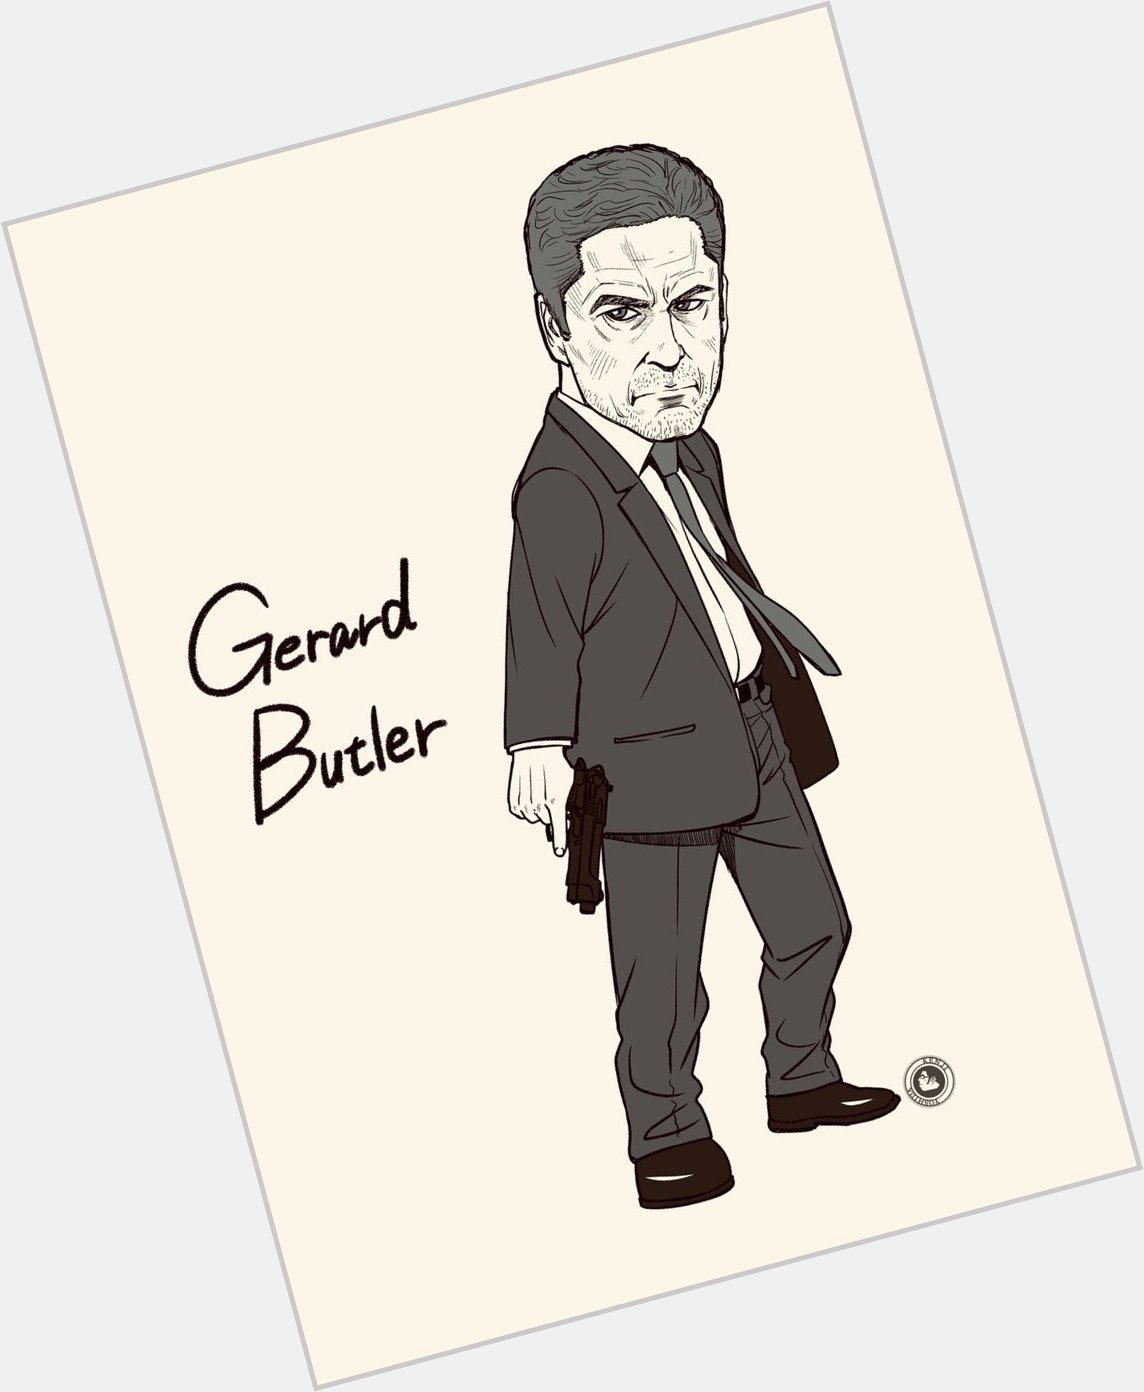                                Happy Birthday to Gerard Butler        